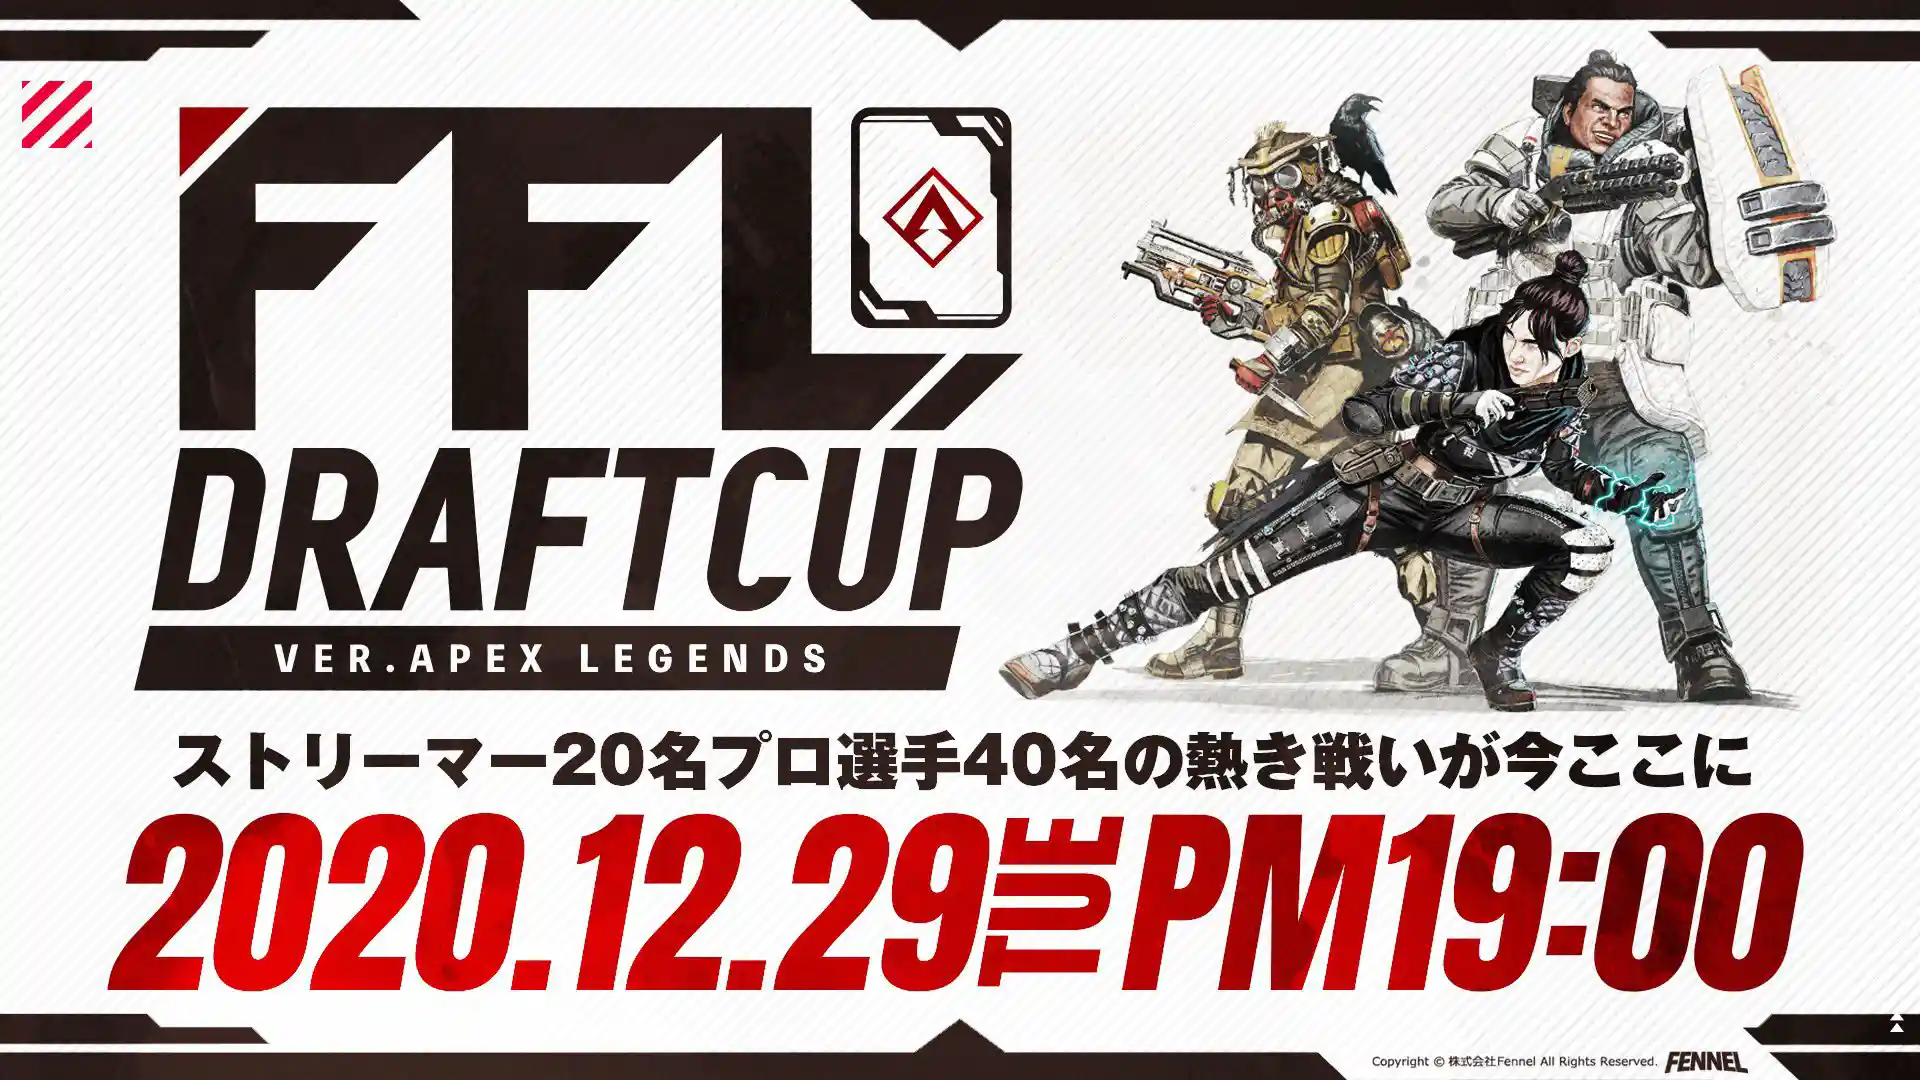 FFL DRAFT CUP Ver.APEX LEGENDS